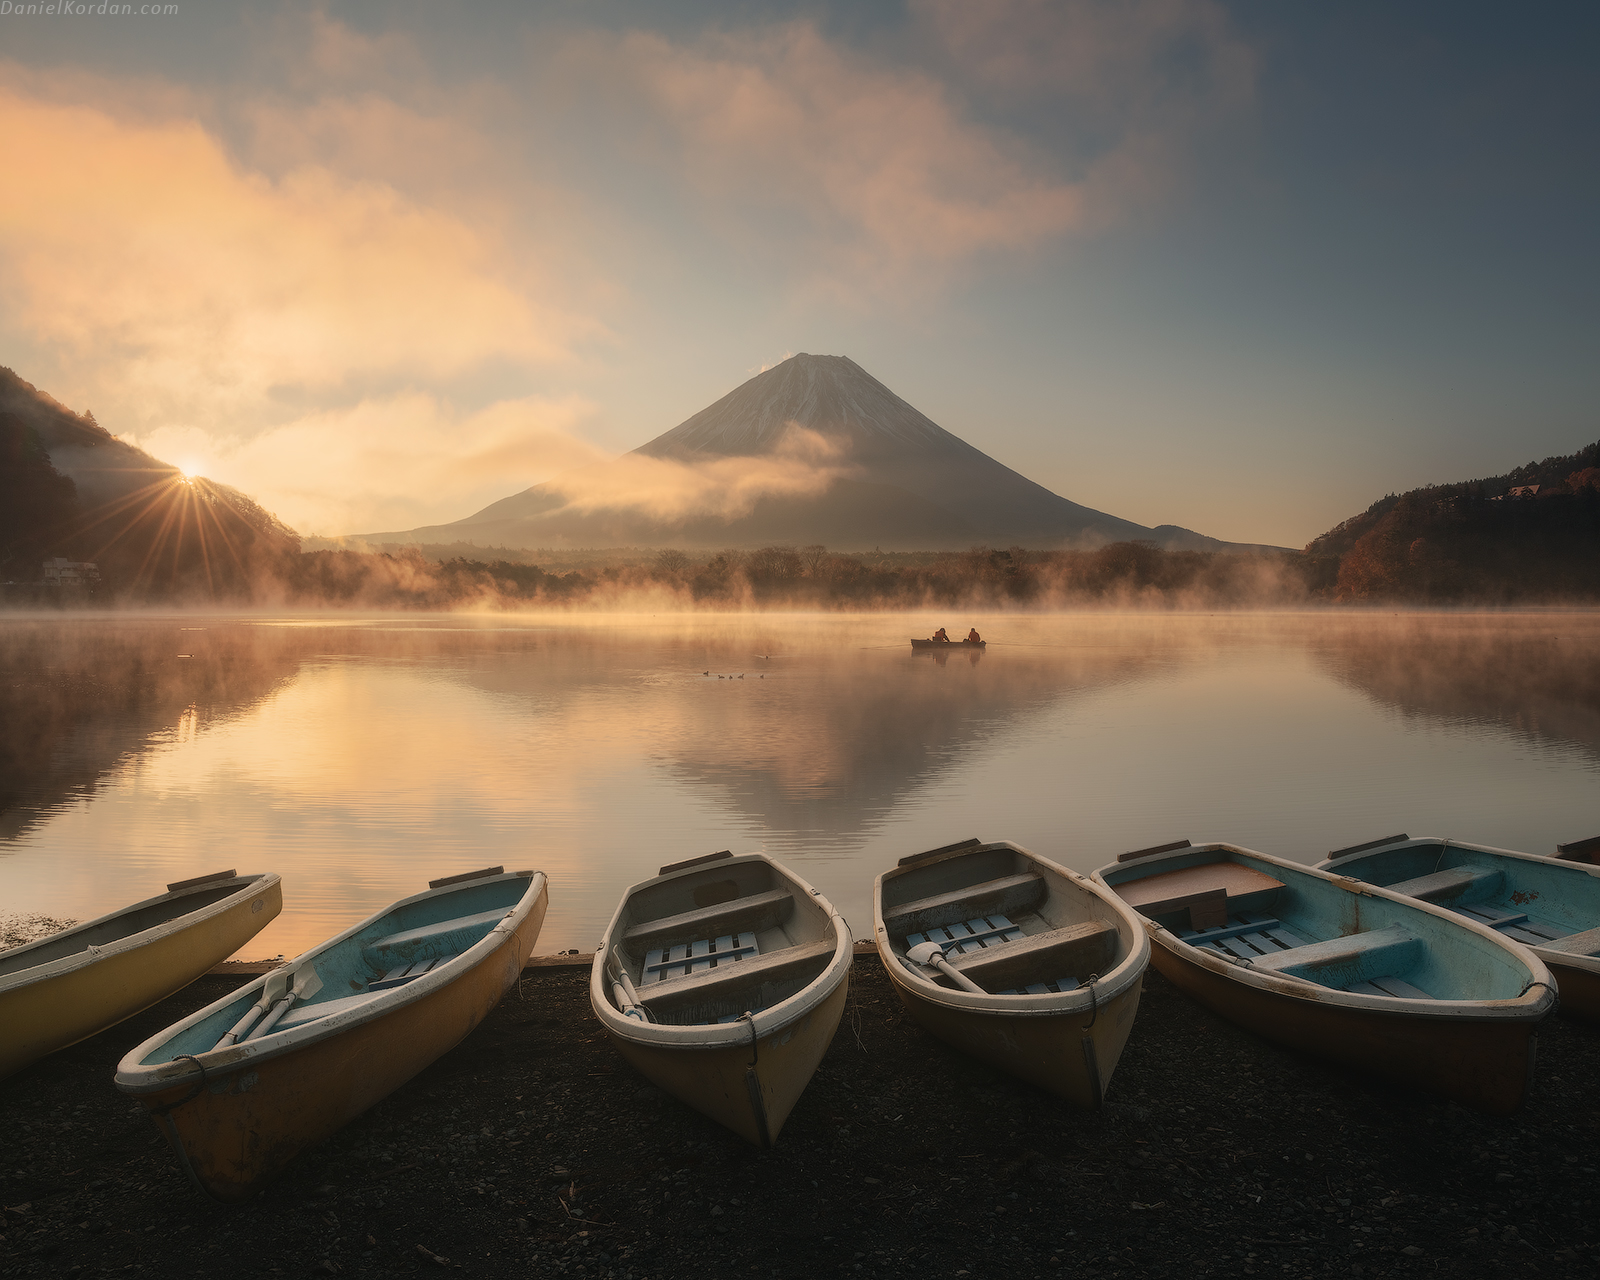 General 1600x1280 Daniel Kordan landscape sky mist mountains Mount Fuji Japan water lake boat sunrise sun rays morning horizon